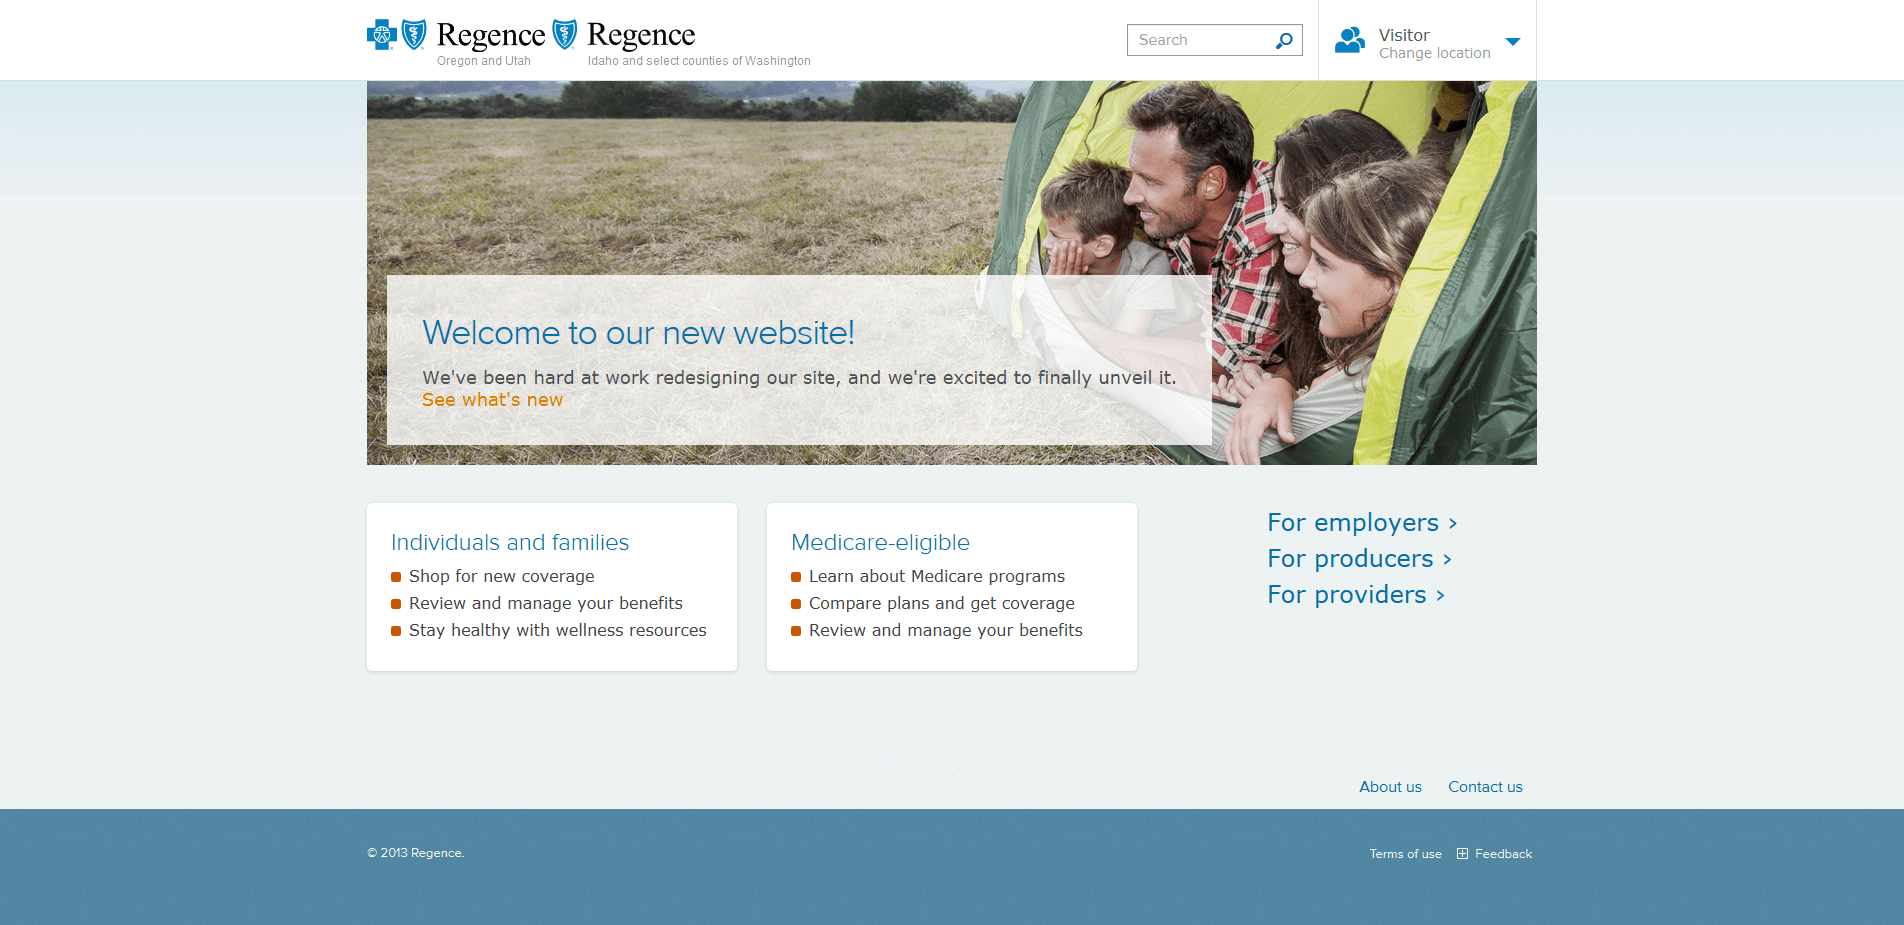 Regence Portal (BlueCross BlueShield) home page